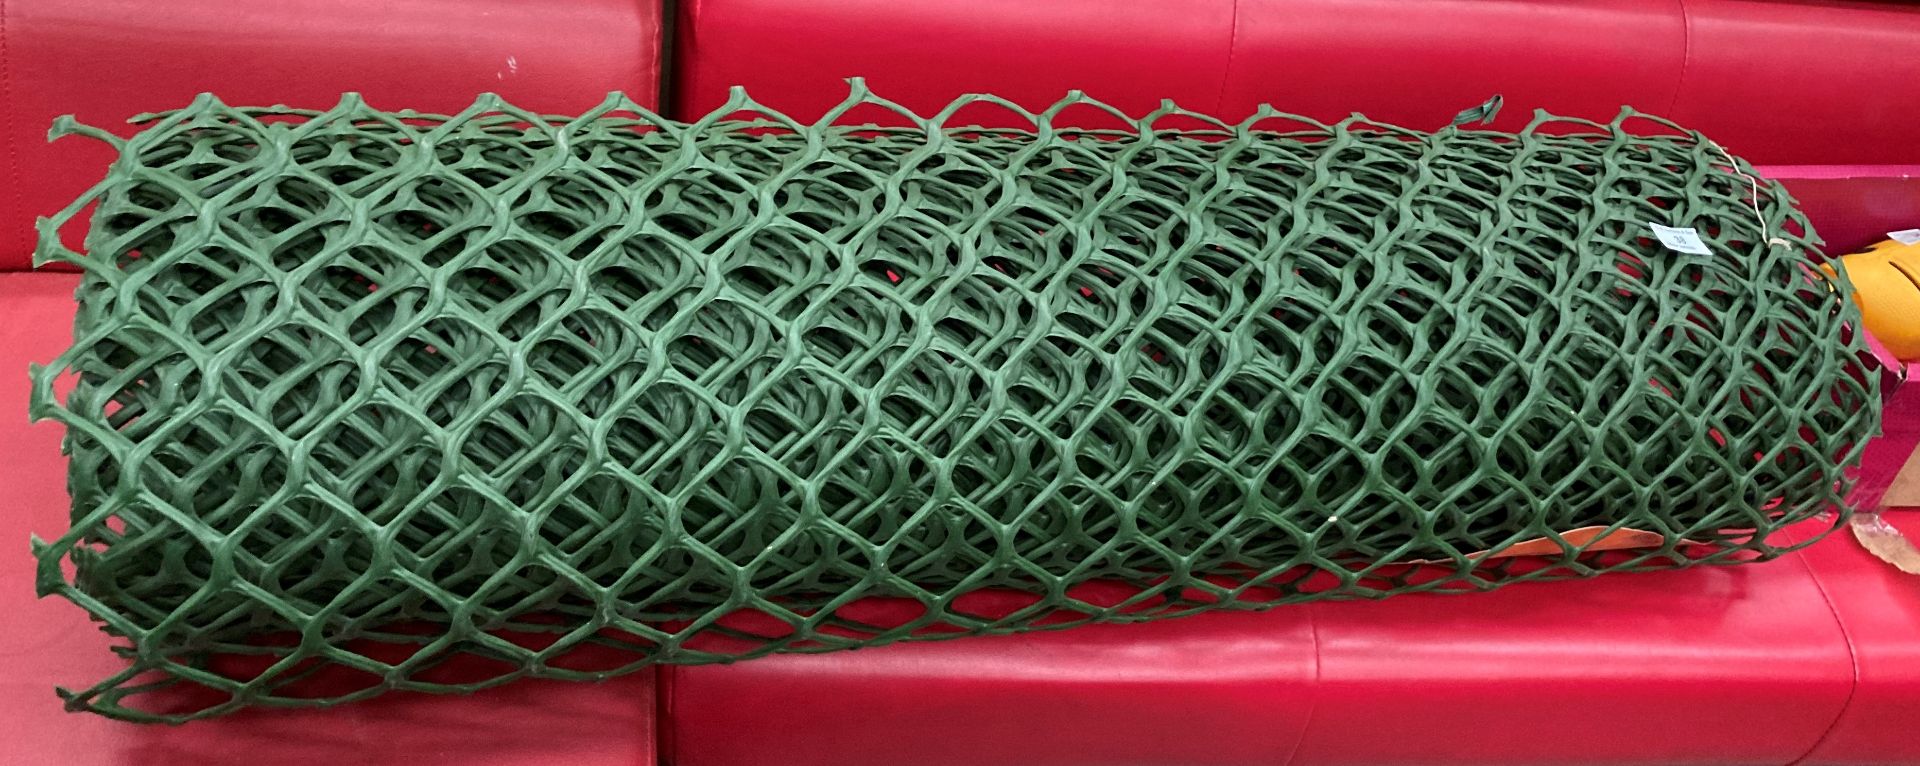 A green plastic heavy duty garden mesh netting roll approximately 10m x 1m